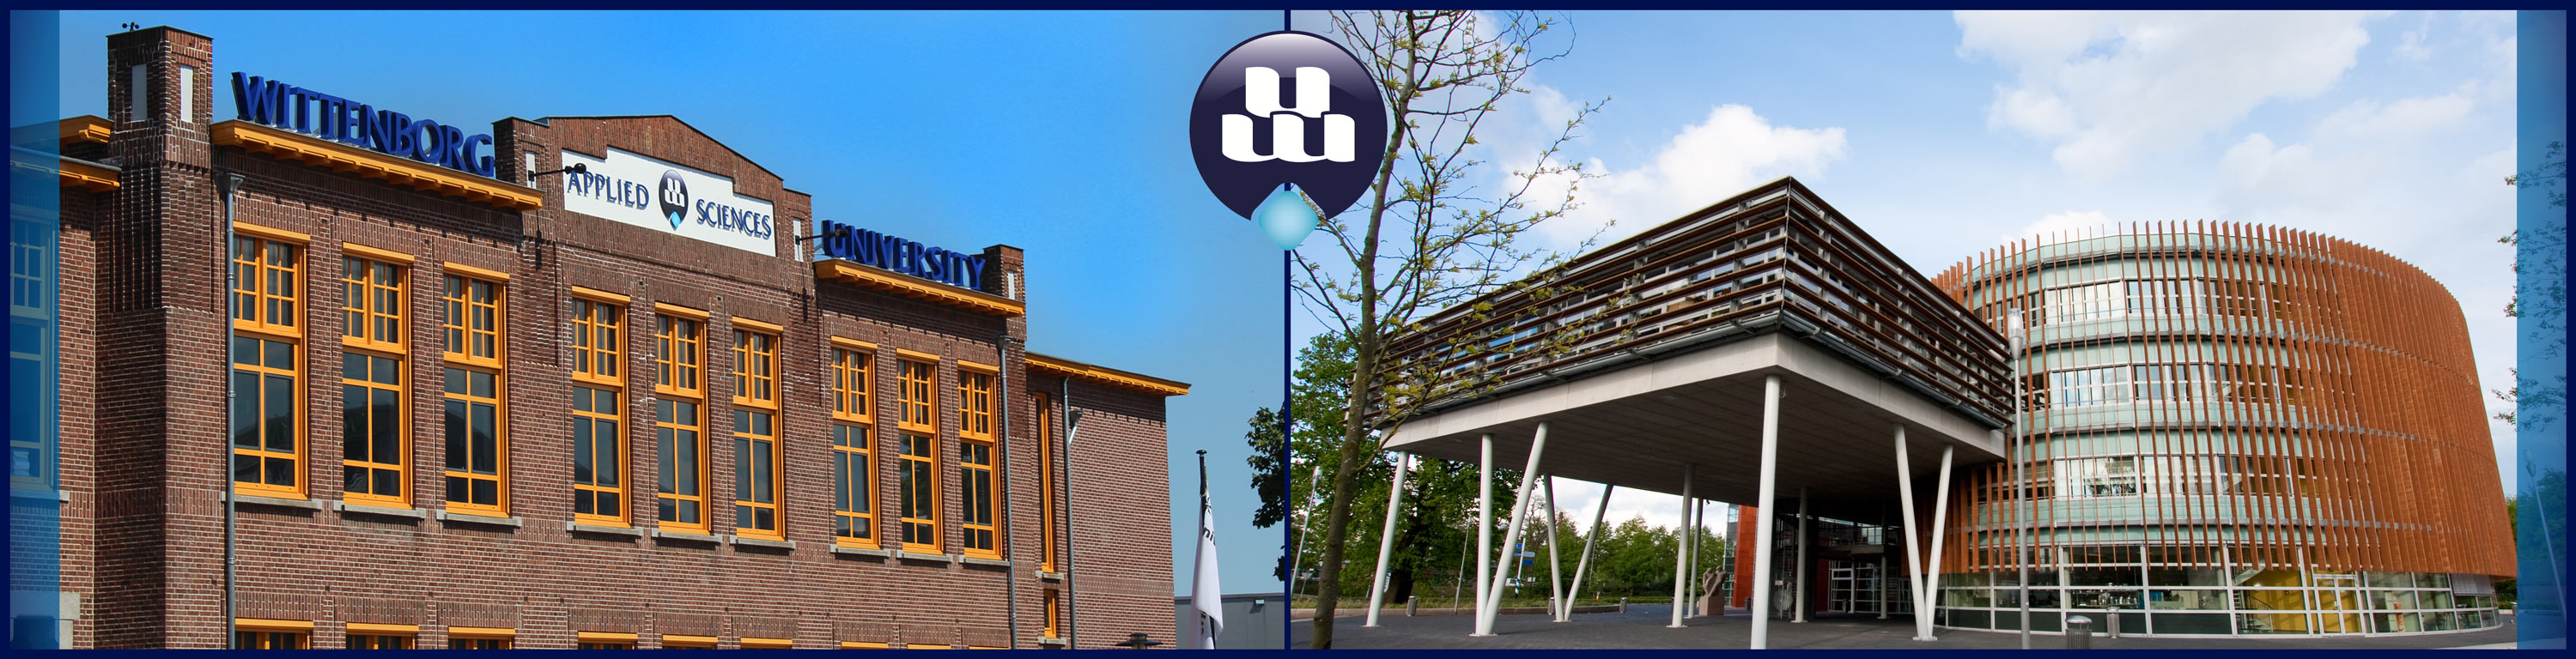 Wittenborg University Buildings